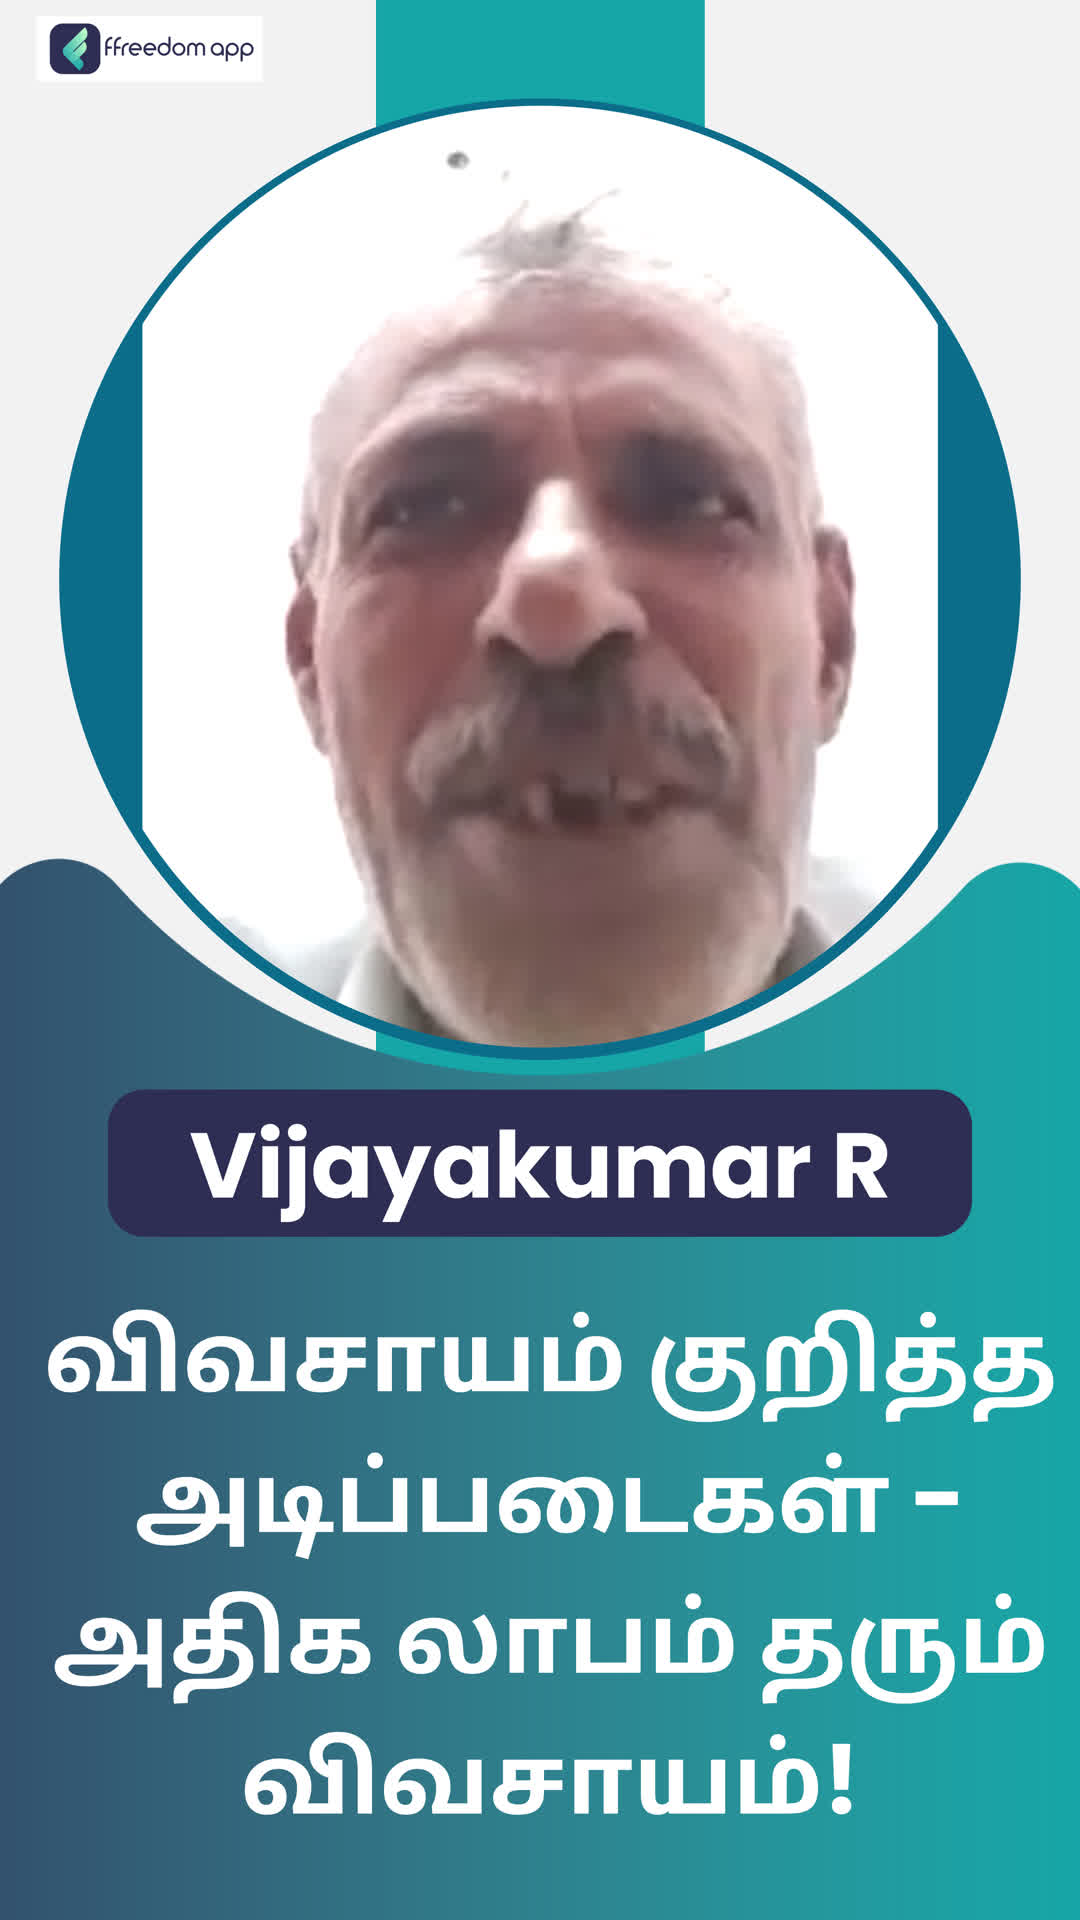 R.VIJAYA KUMAR's Honest Review of ffreedom app - Villupuram ,Tamil Nadu